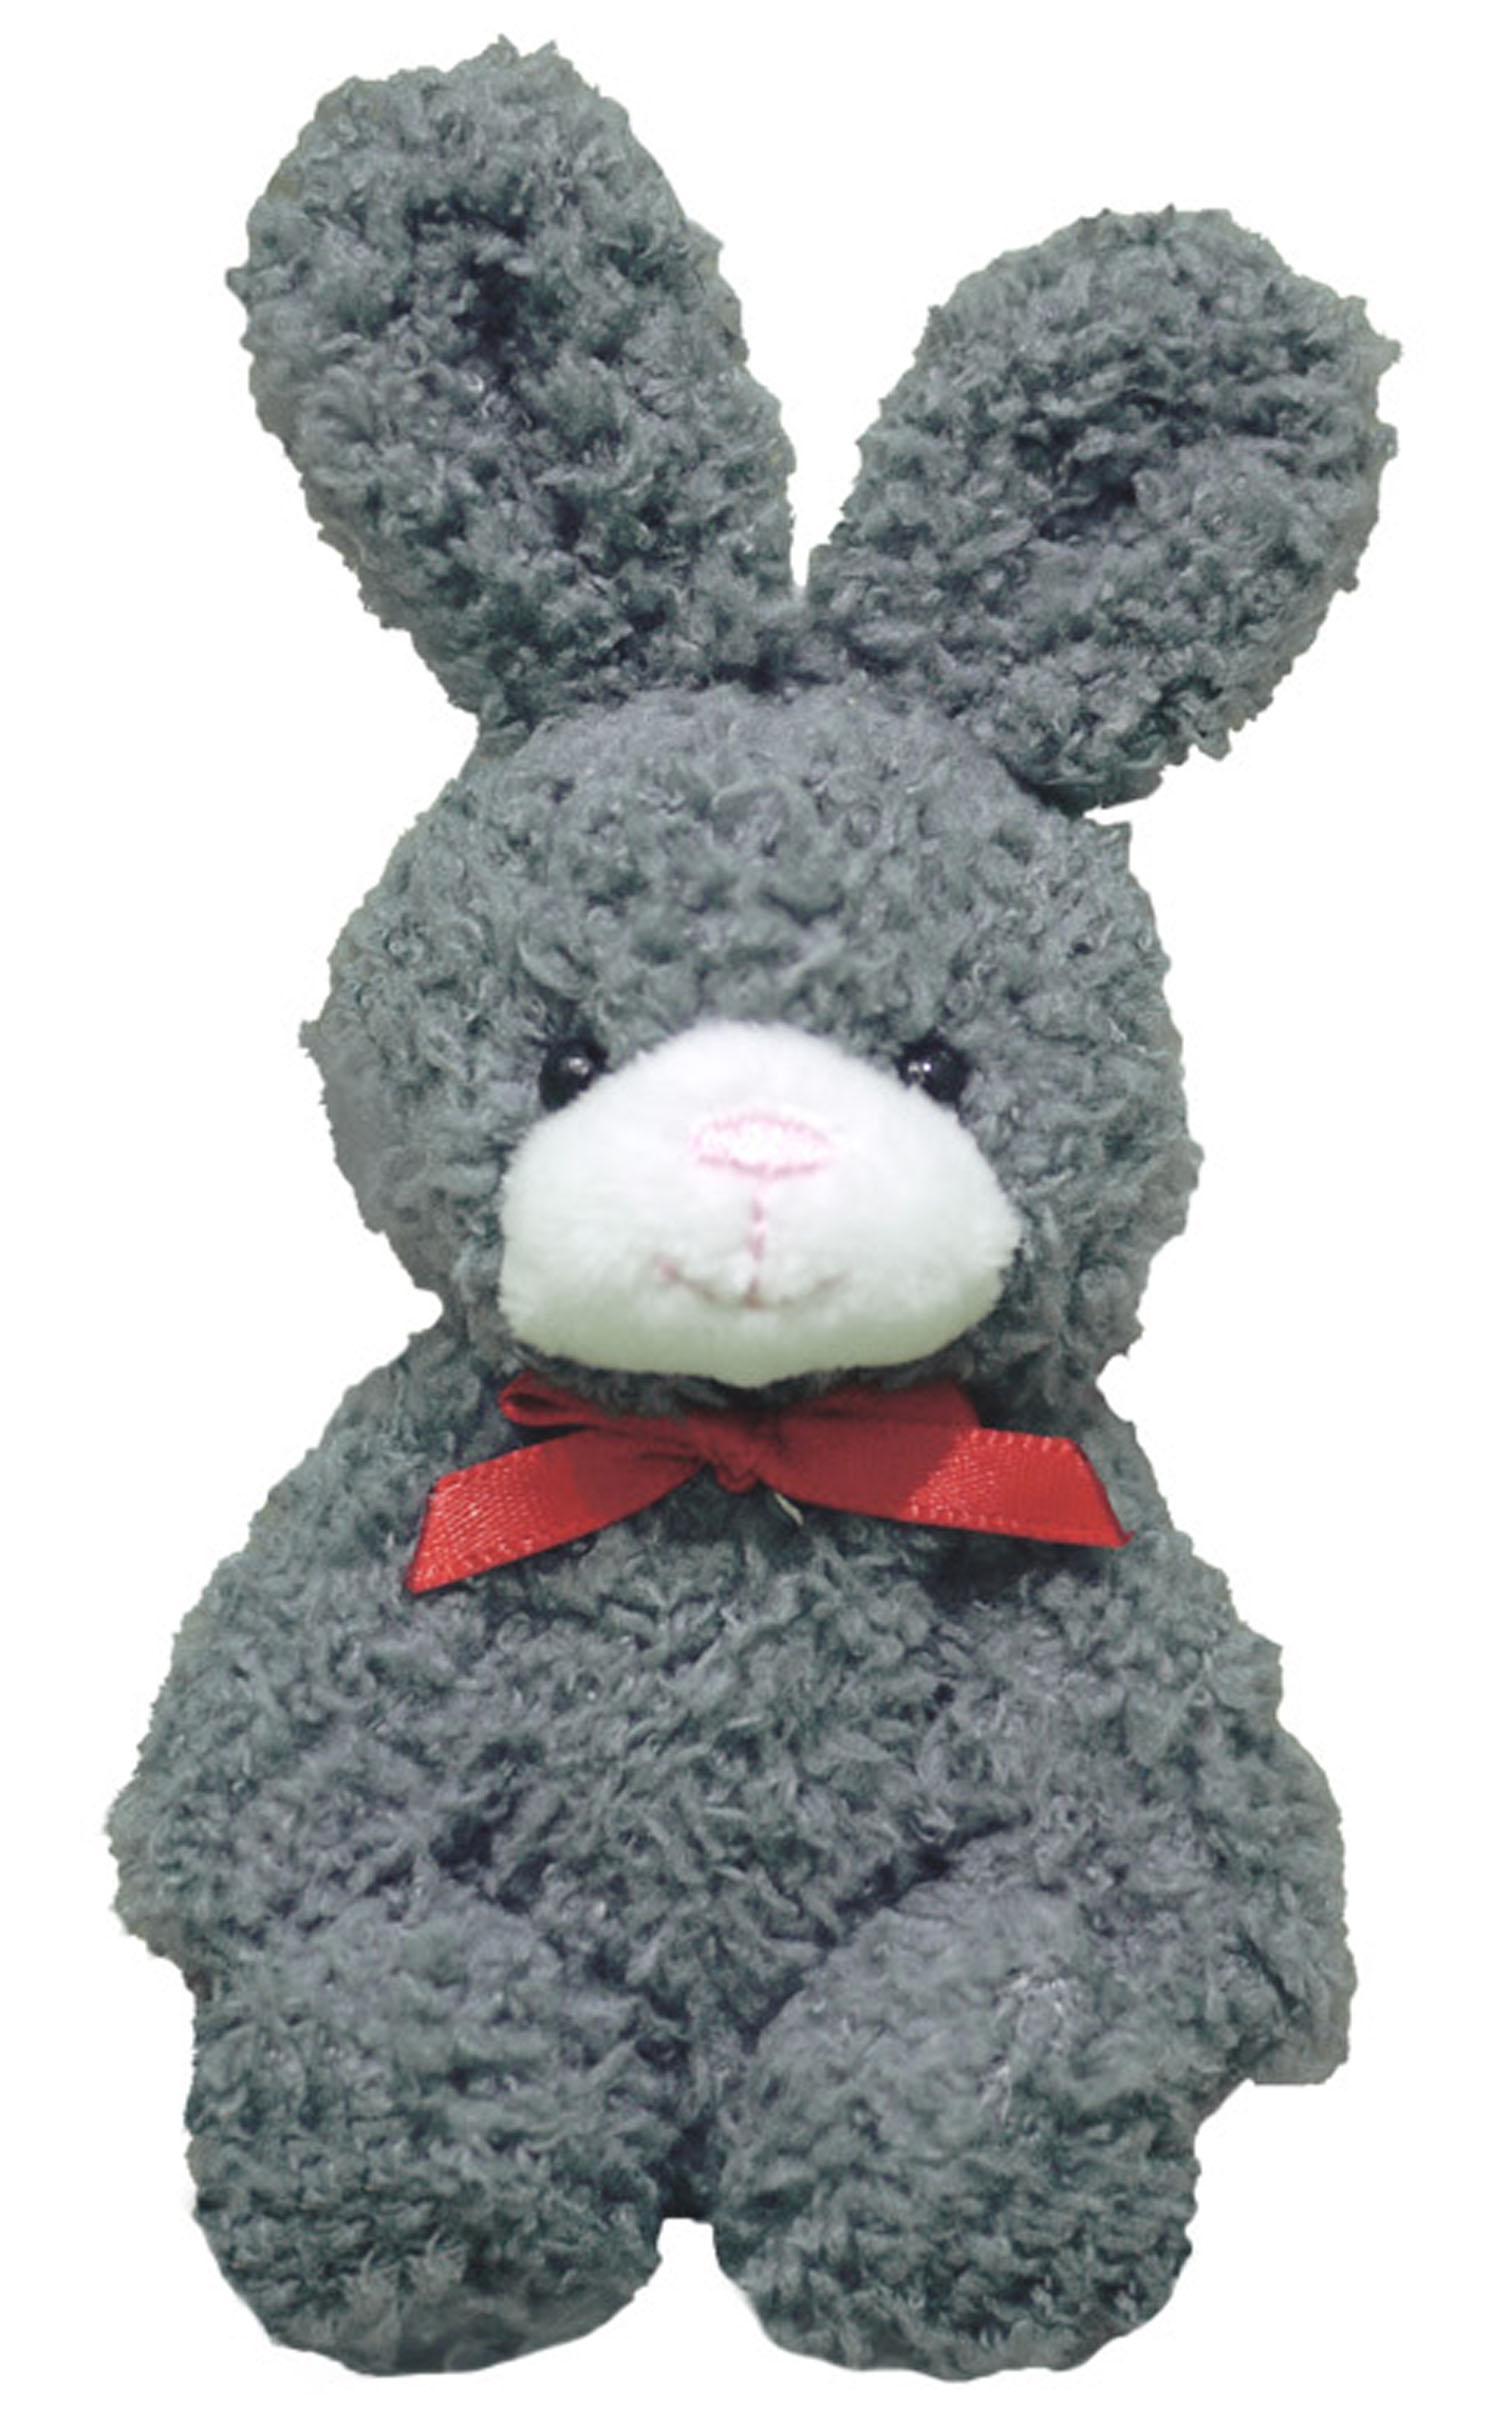 Mini mascot with ball chain, ribbon bunny, gray